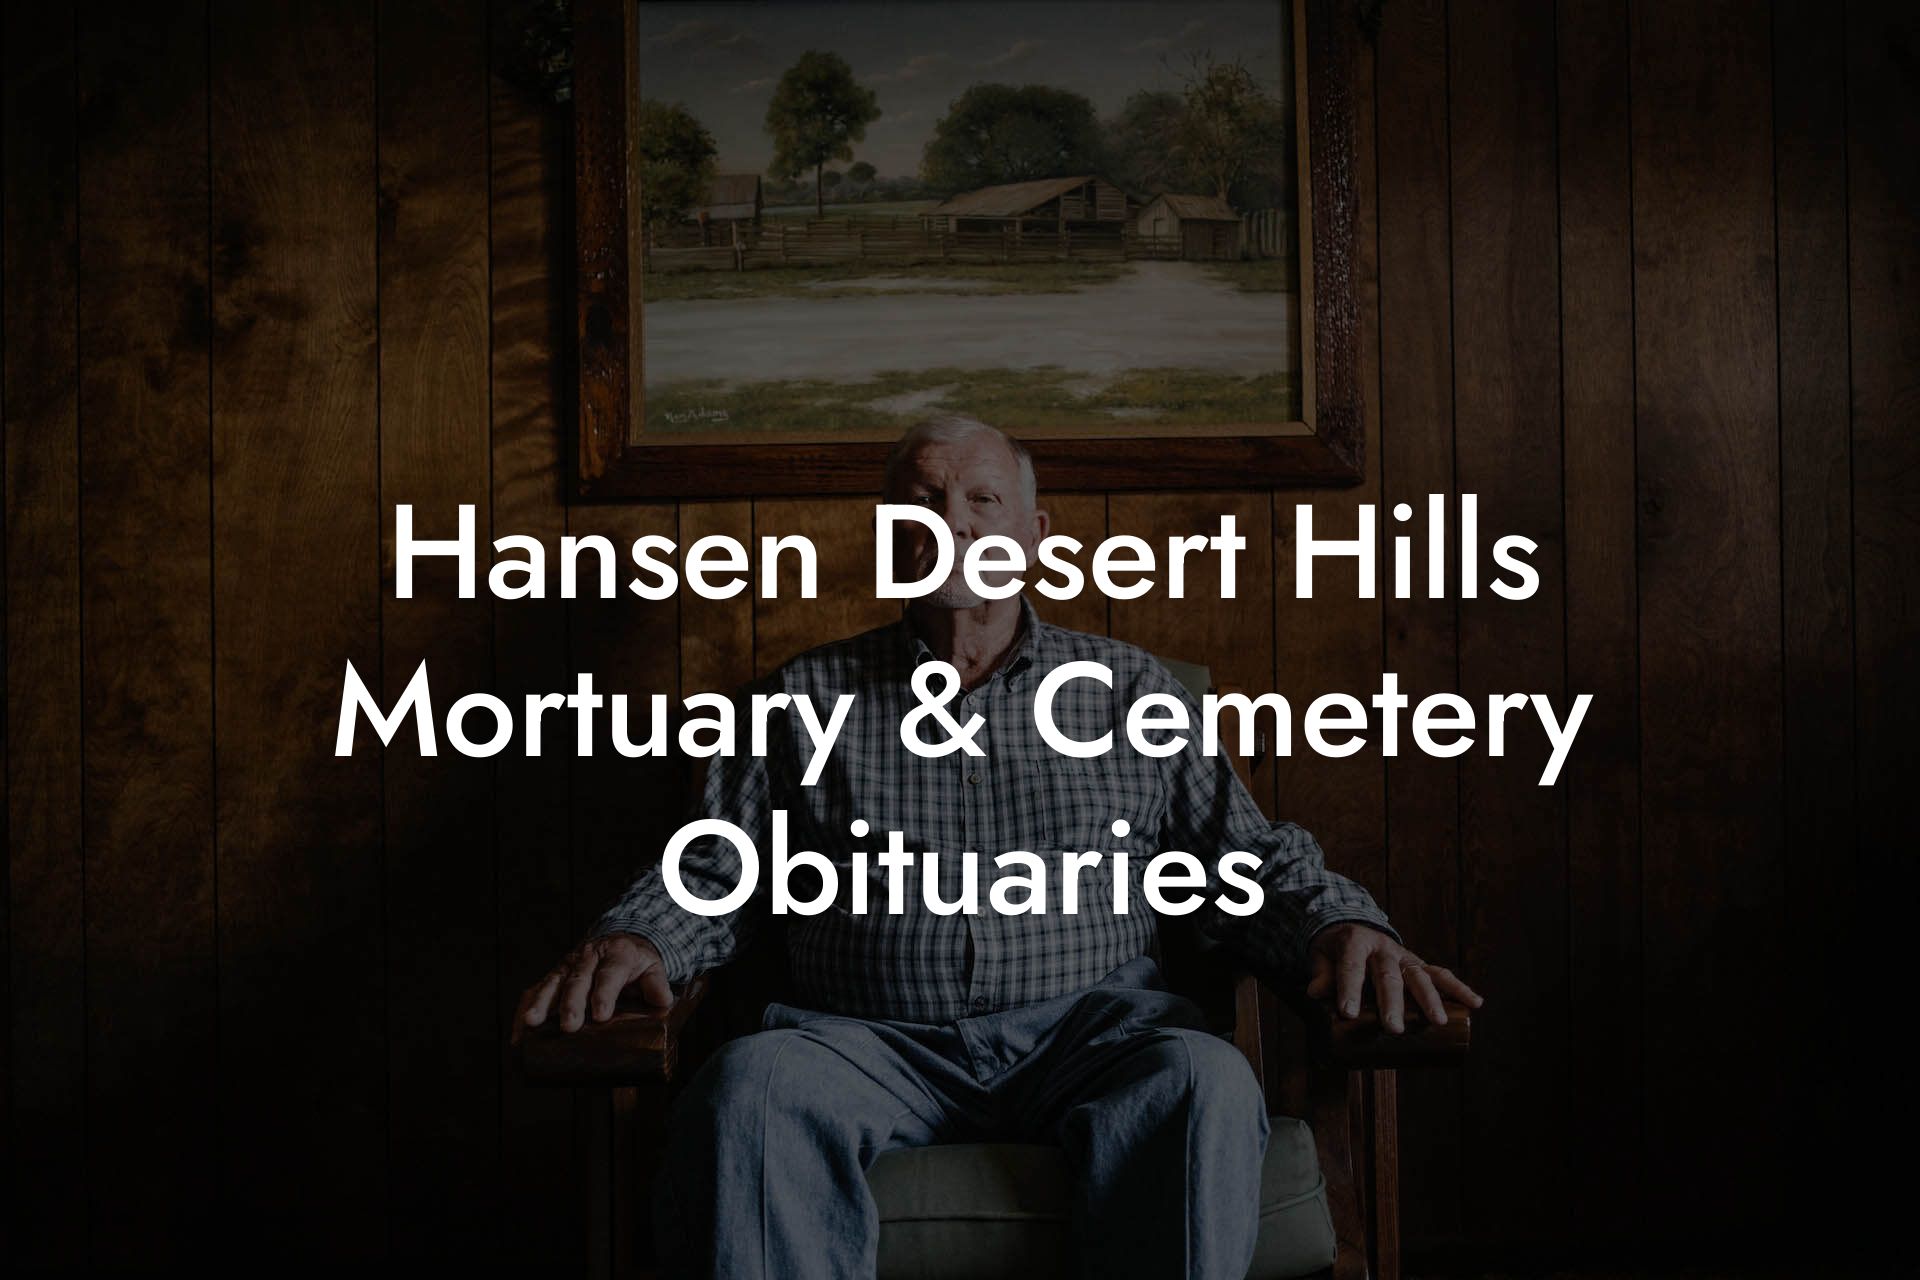 Hansen Desert Hills Mortuary & Cemetery Obituaries